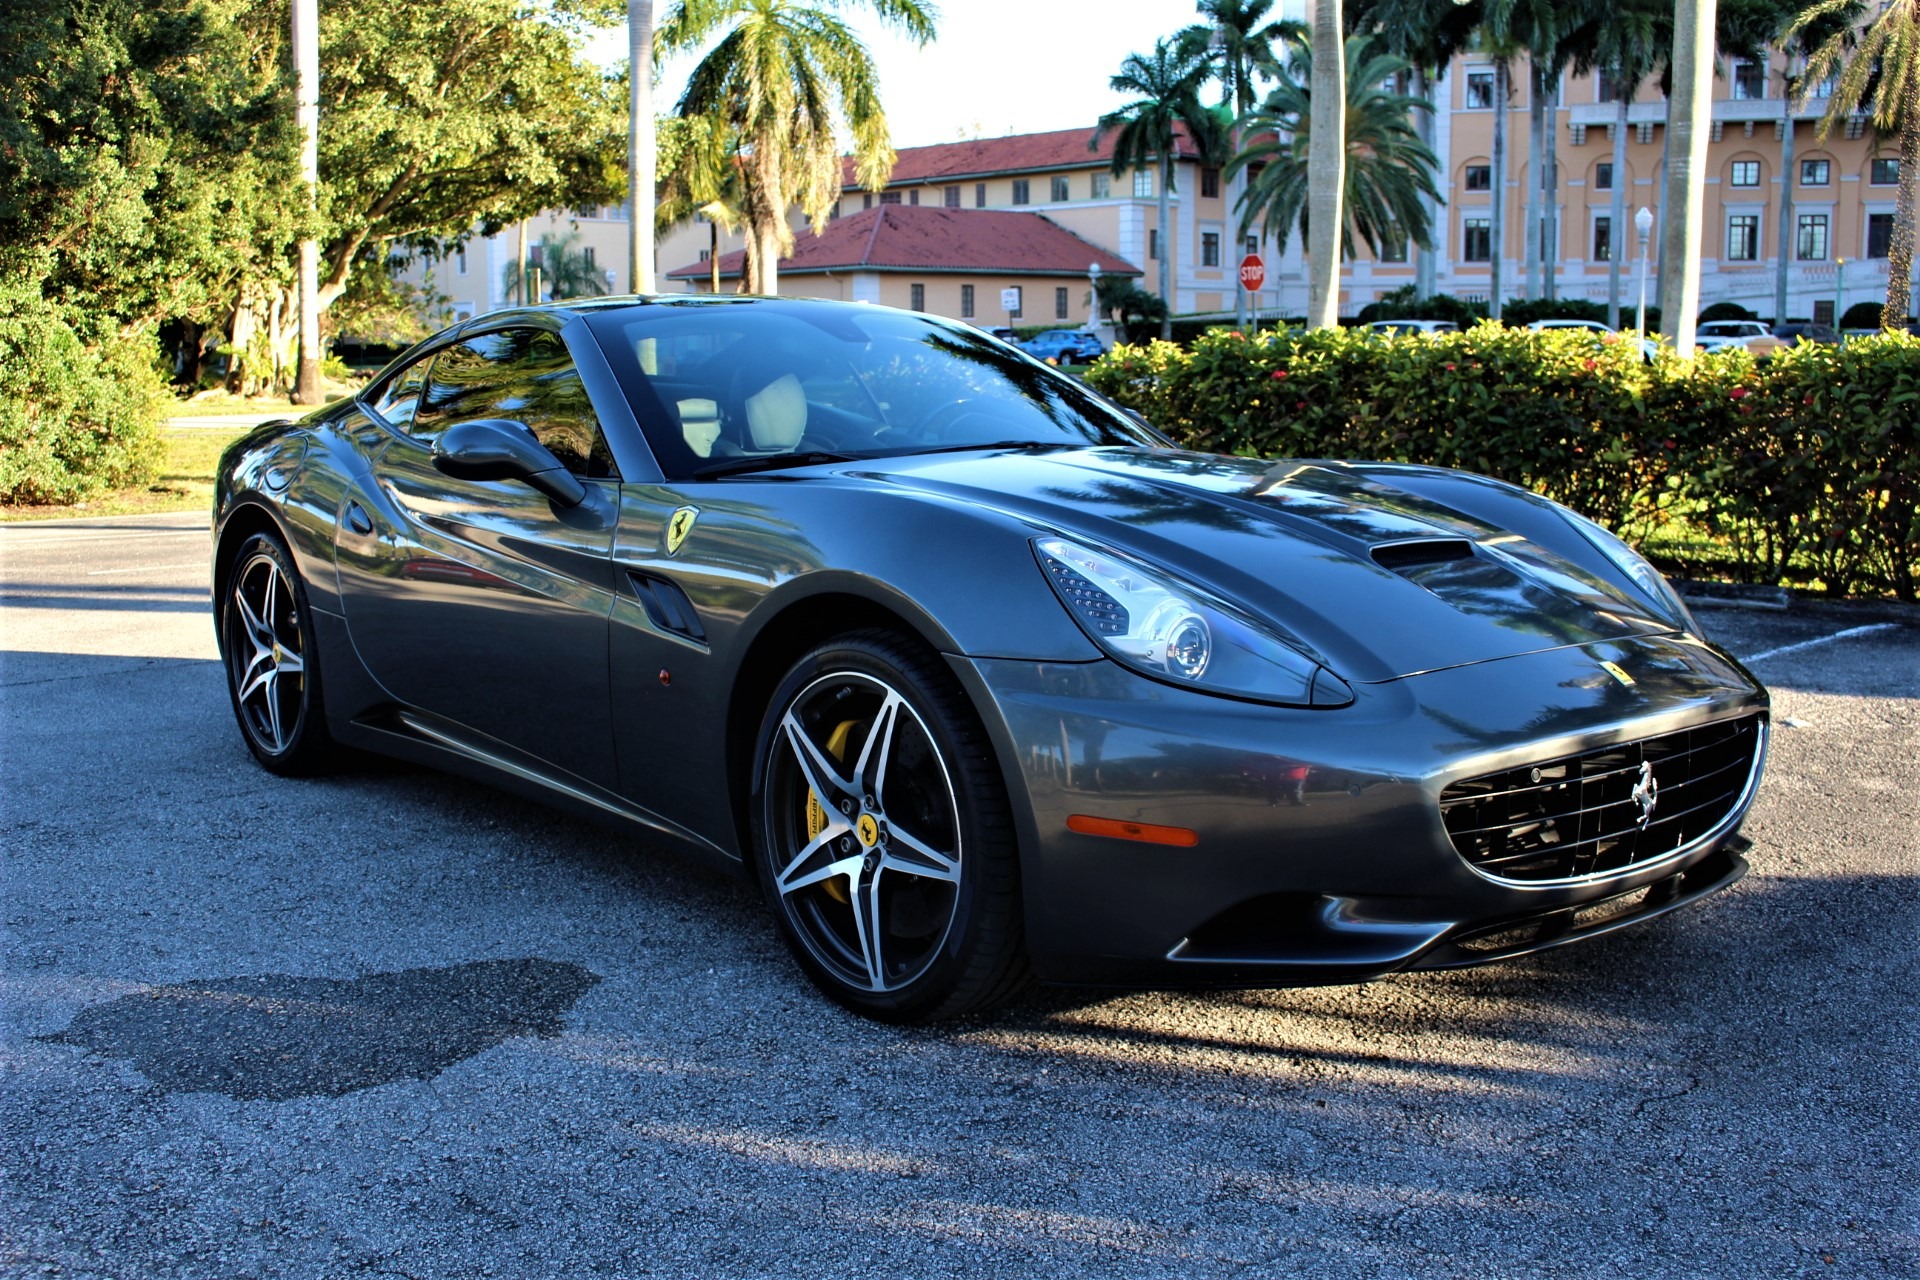 Used 2011 Ferrari California for sale Sold at The Gables Sports Cars in Miami FL 33146 3